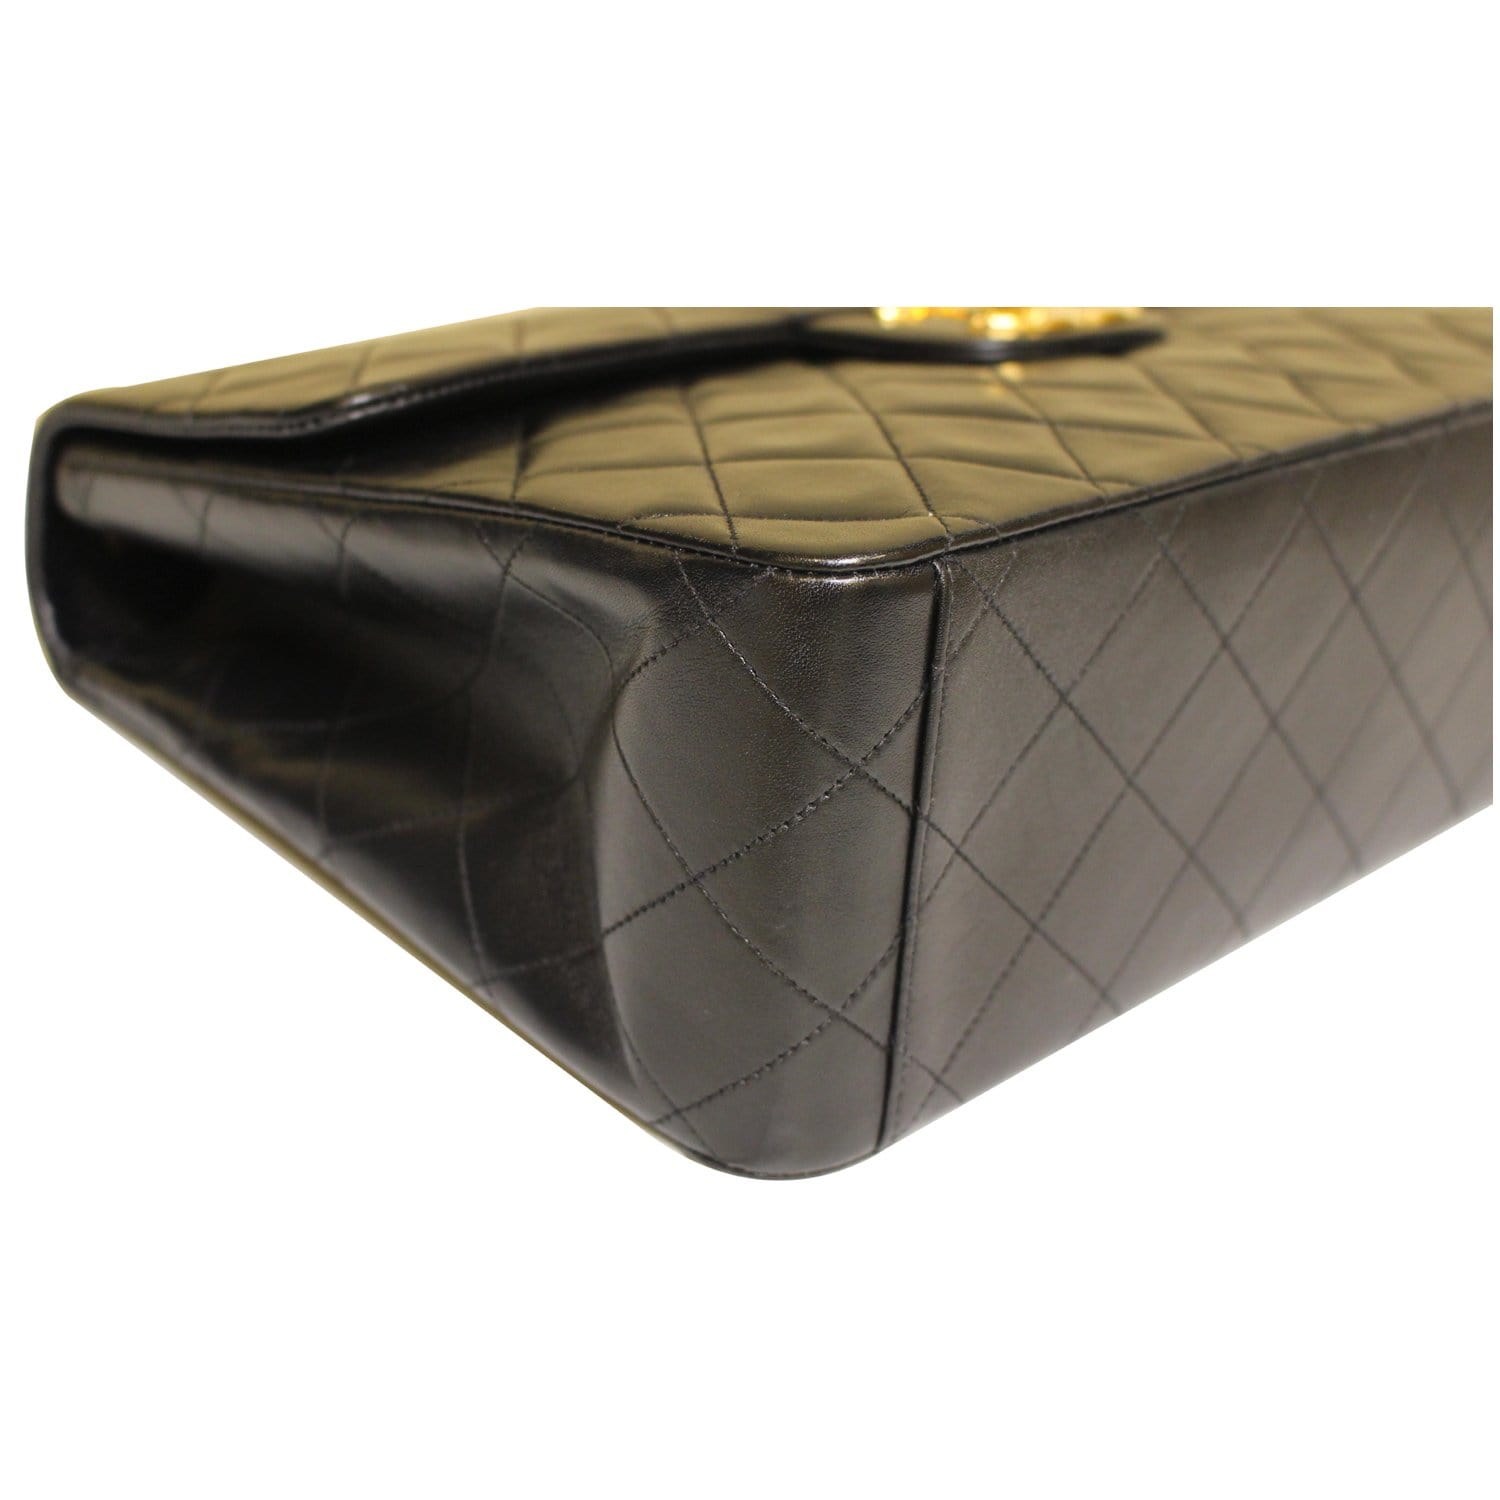 Black Chanel Jumbo XL Classic Lambskin Single Flap Bag – Designer